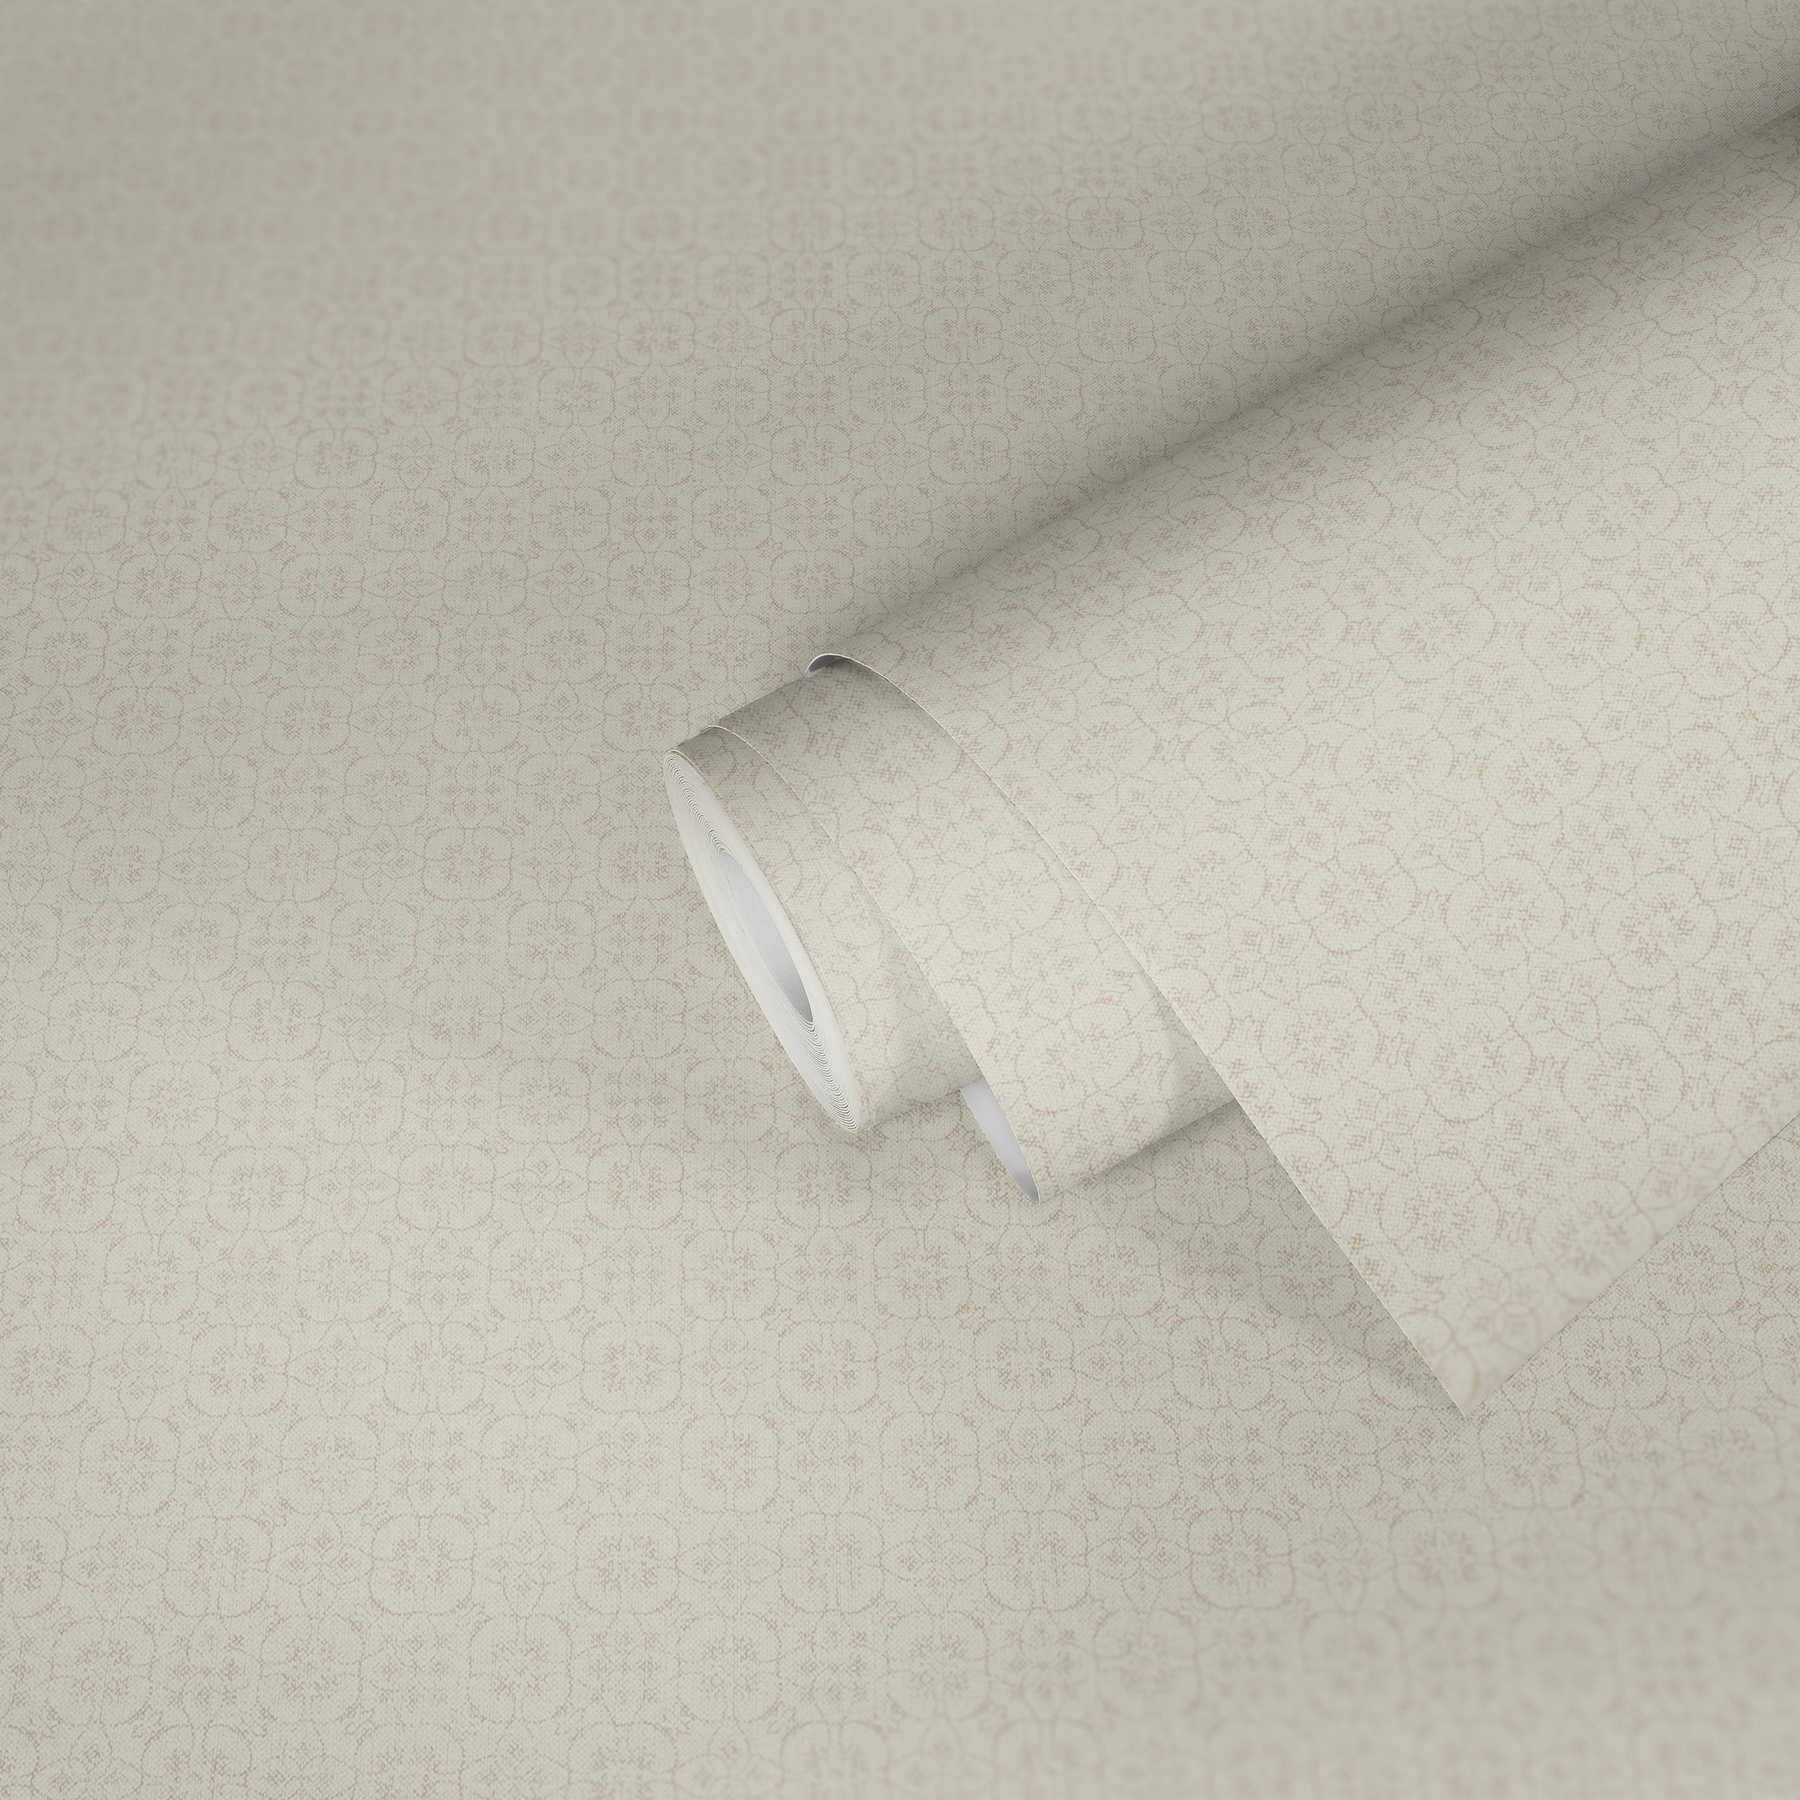             Linen look wallpaper with filigree pattern in Scandi style - cream
        